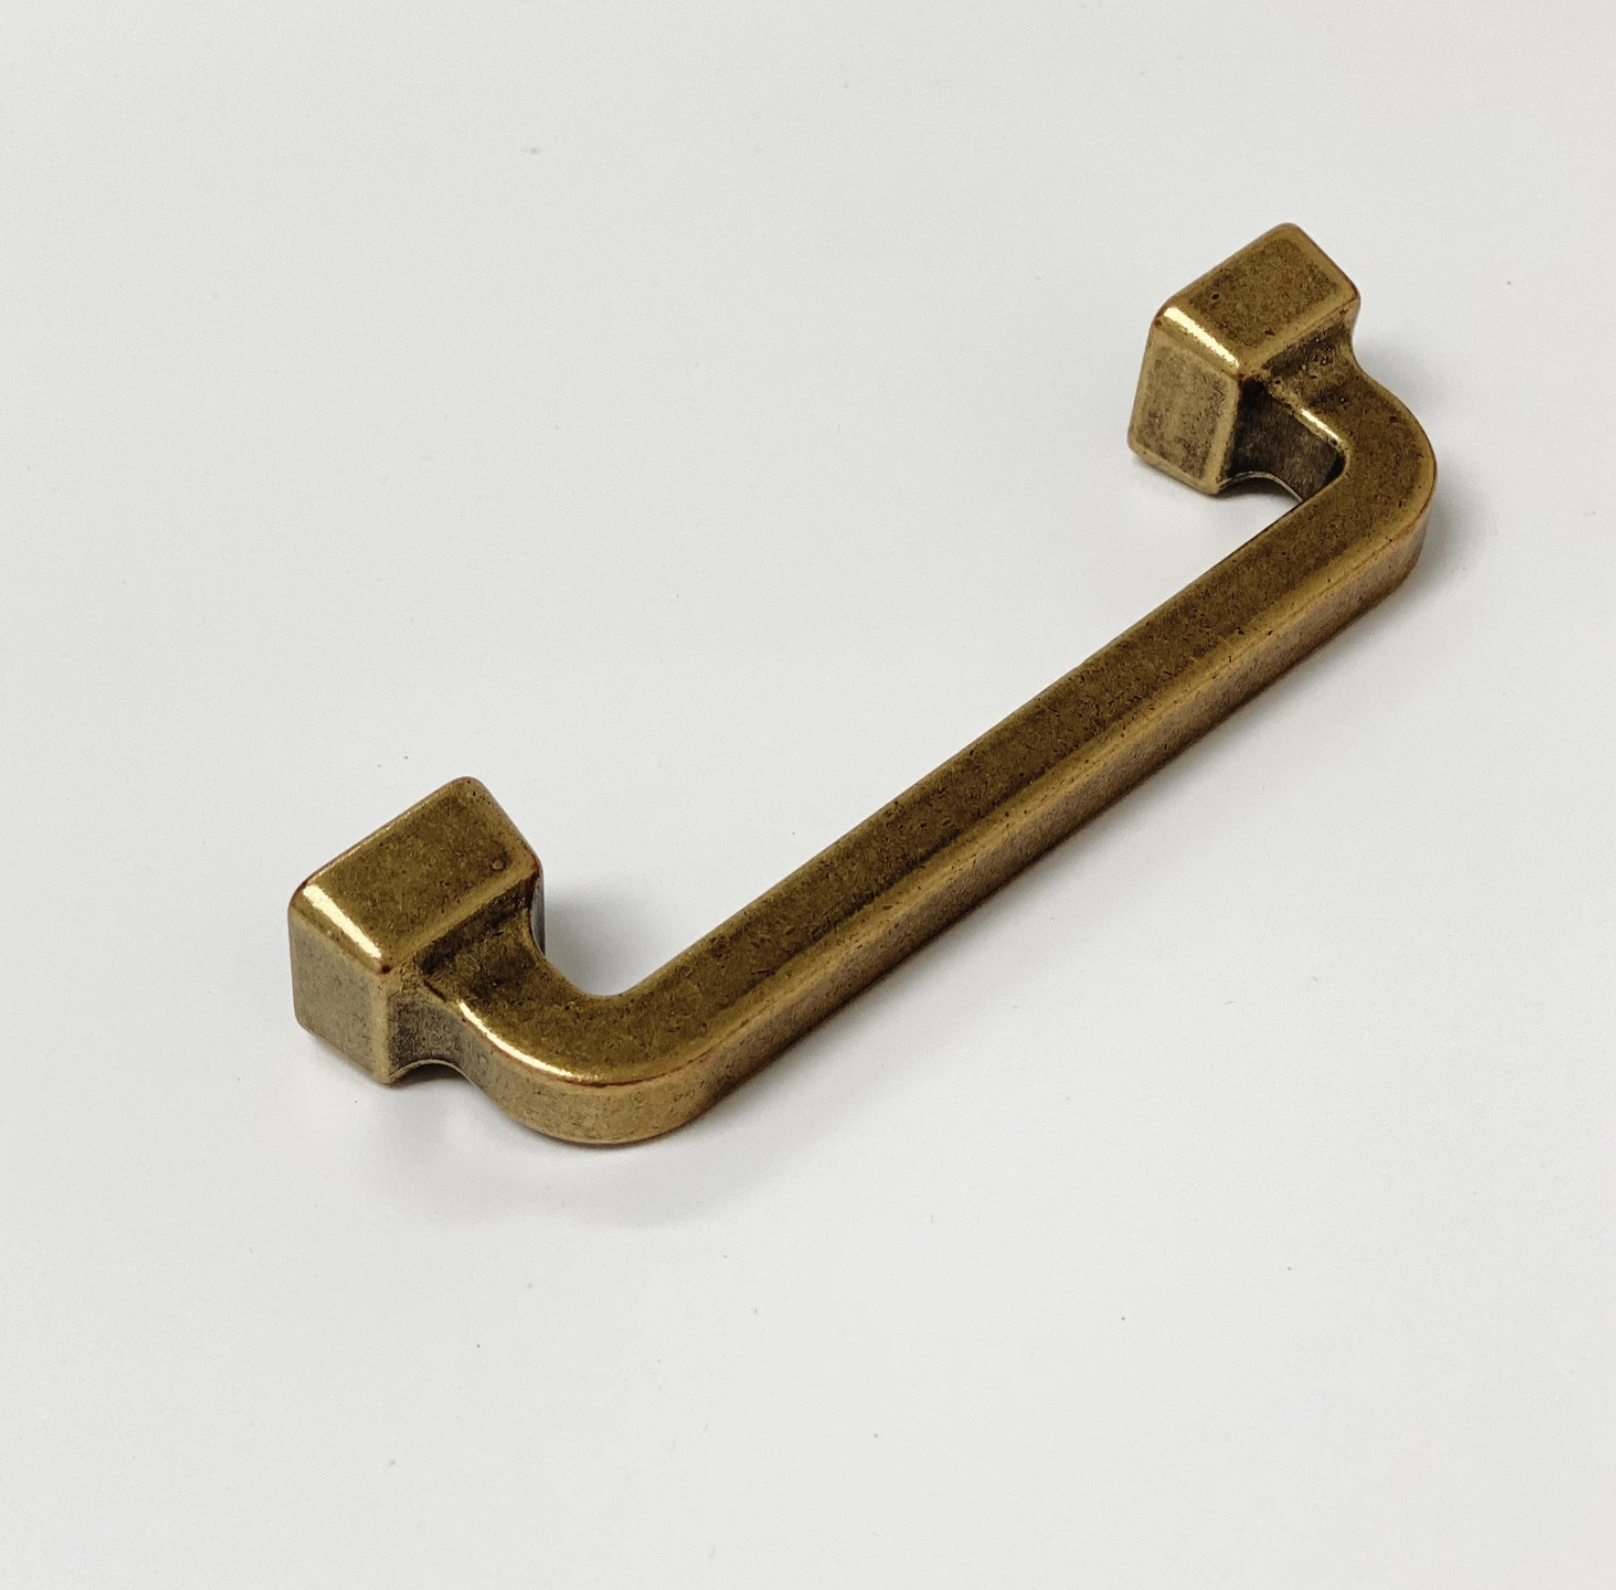 Mission Drawer Pull "Capri" in Antique Brass - Brass Cabinet Hardware | Pulls